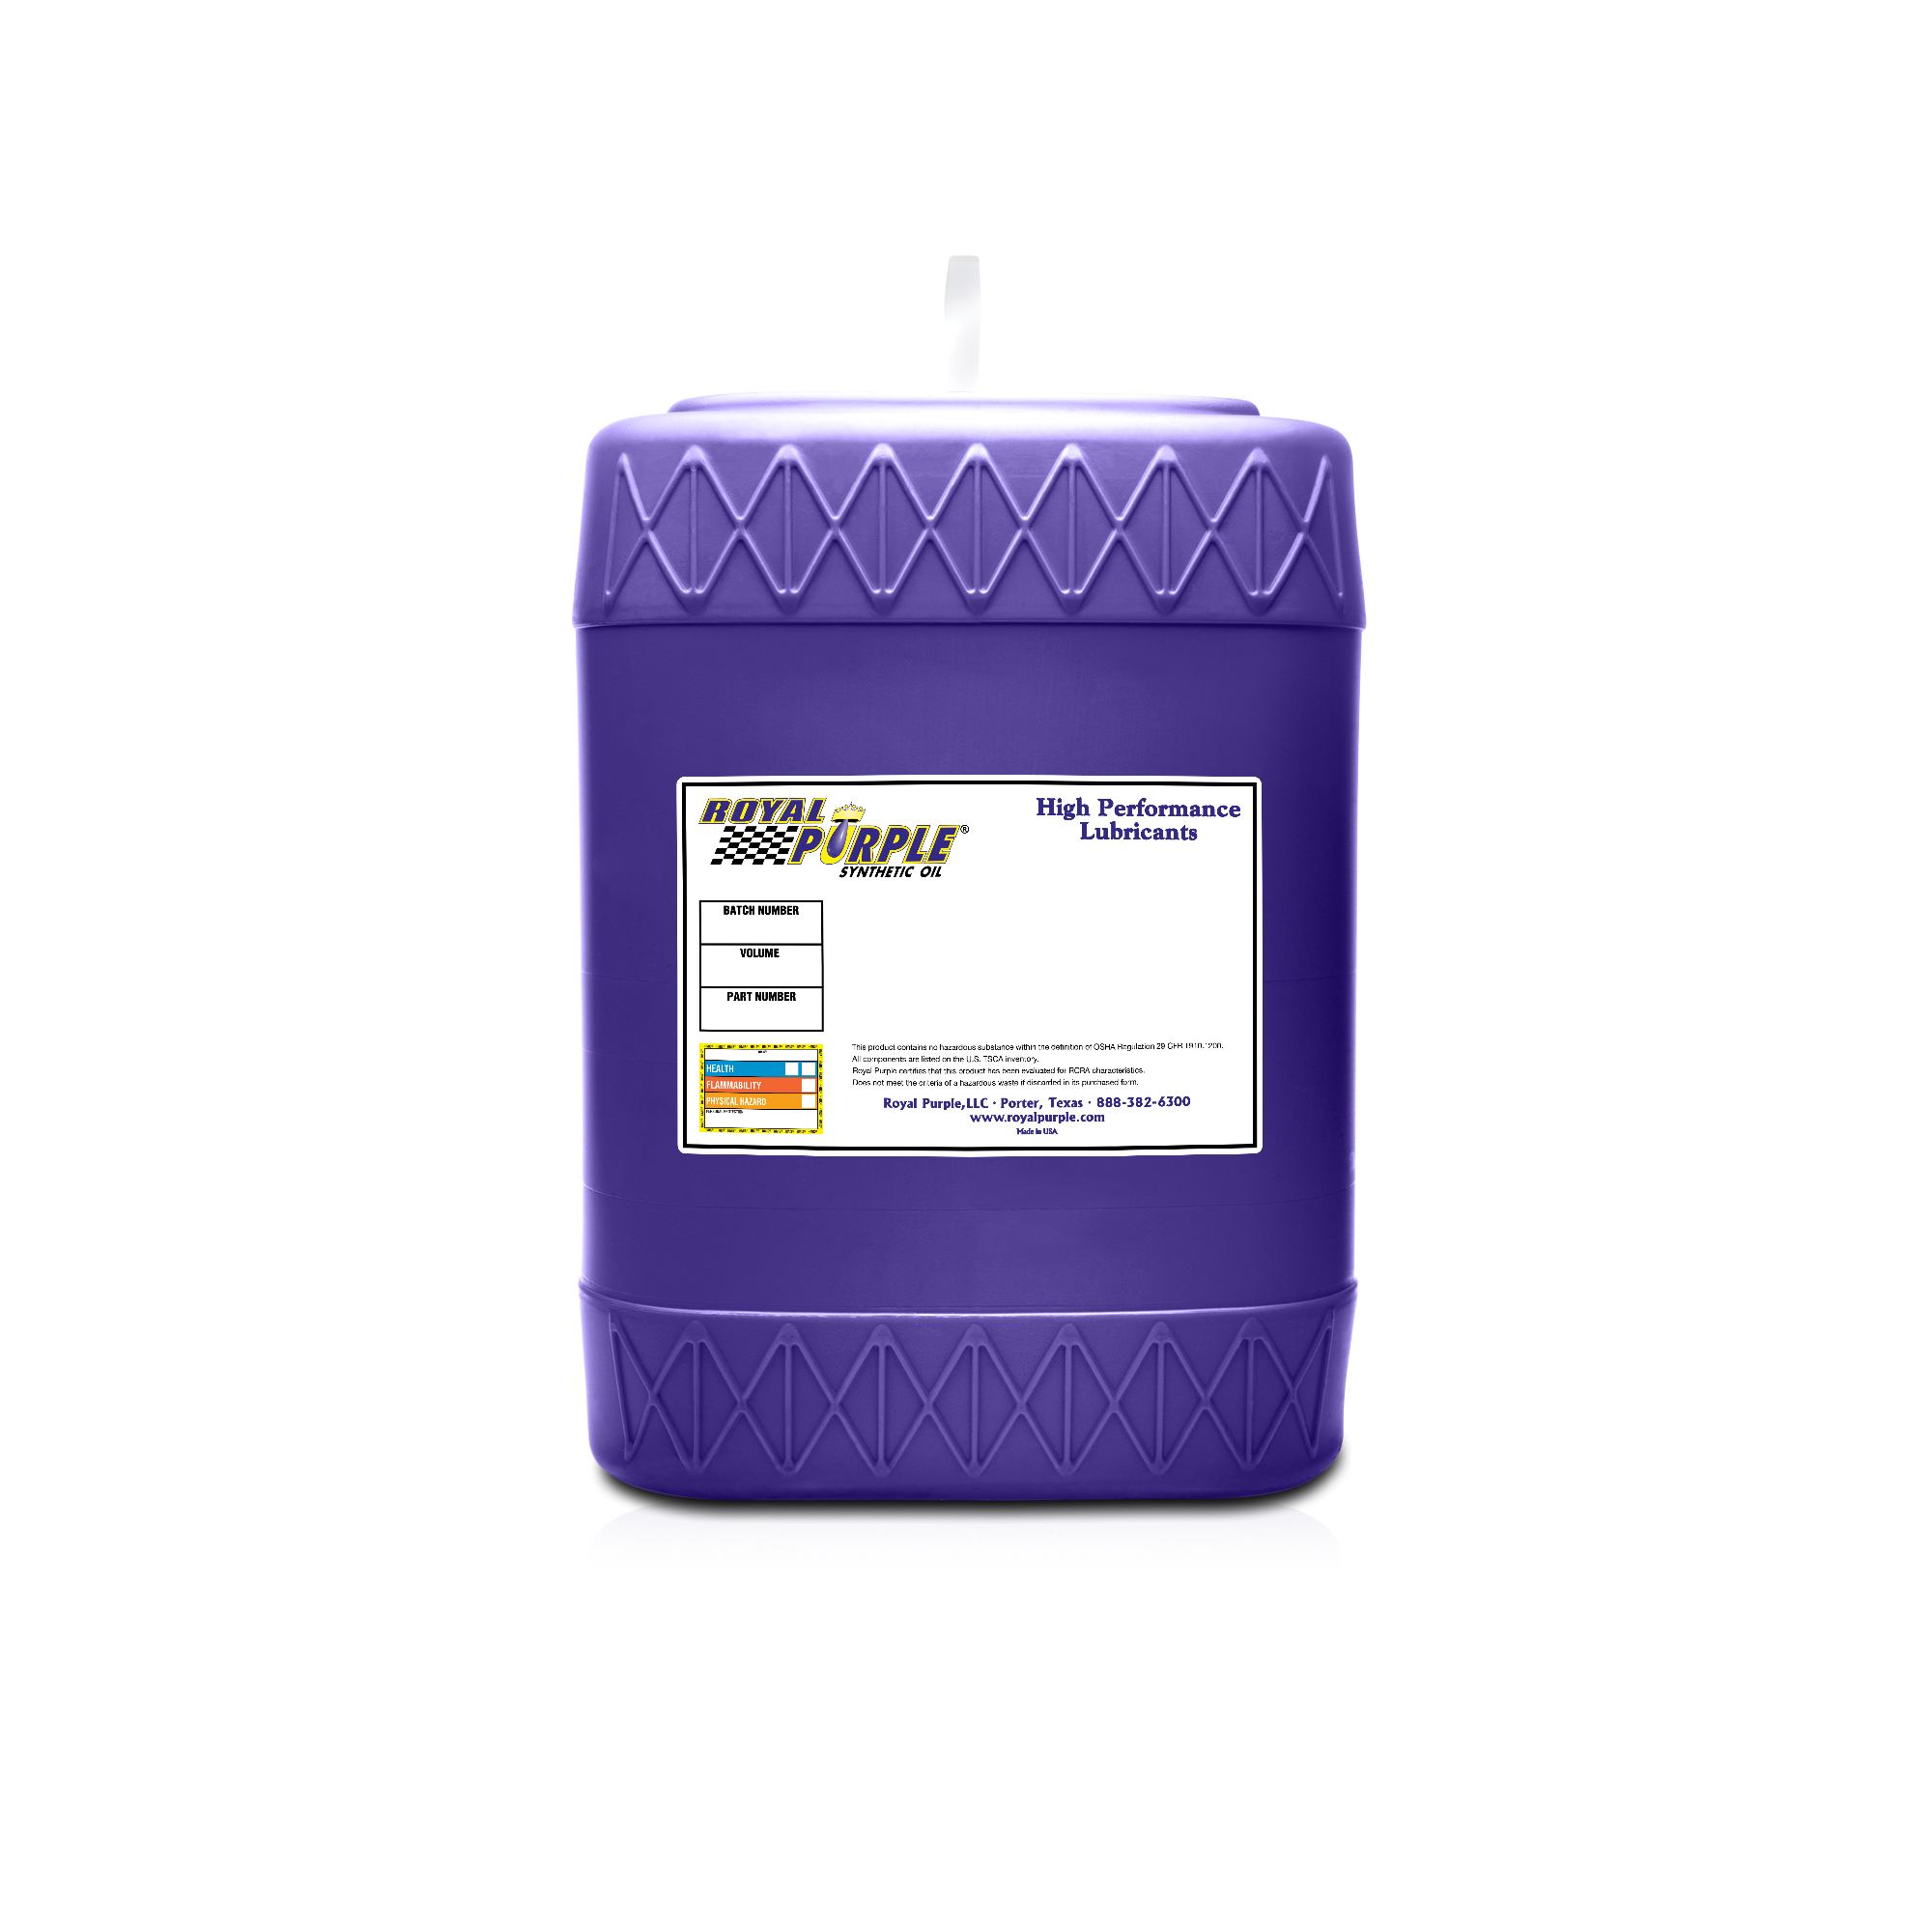 Royal Purple Synergy Worm Gear 1000 5-Gallon Pail 11091 Image